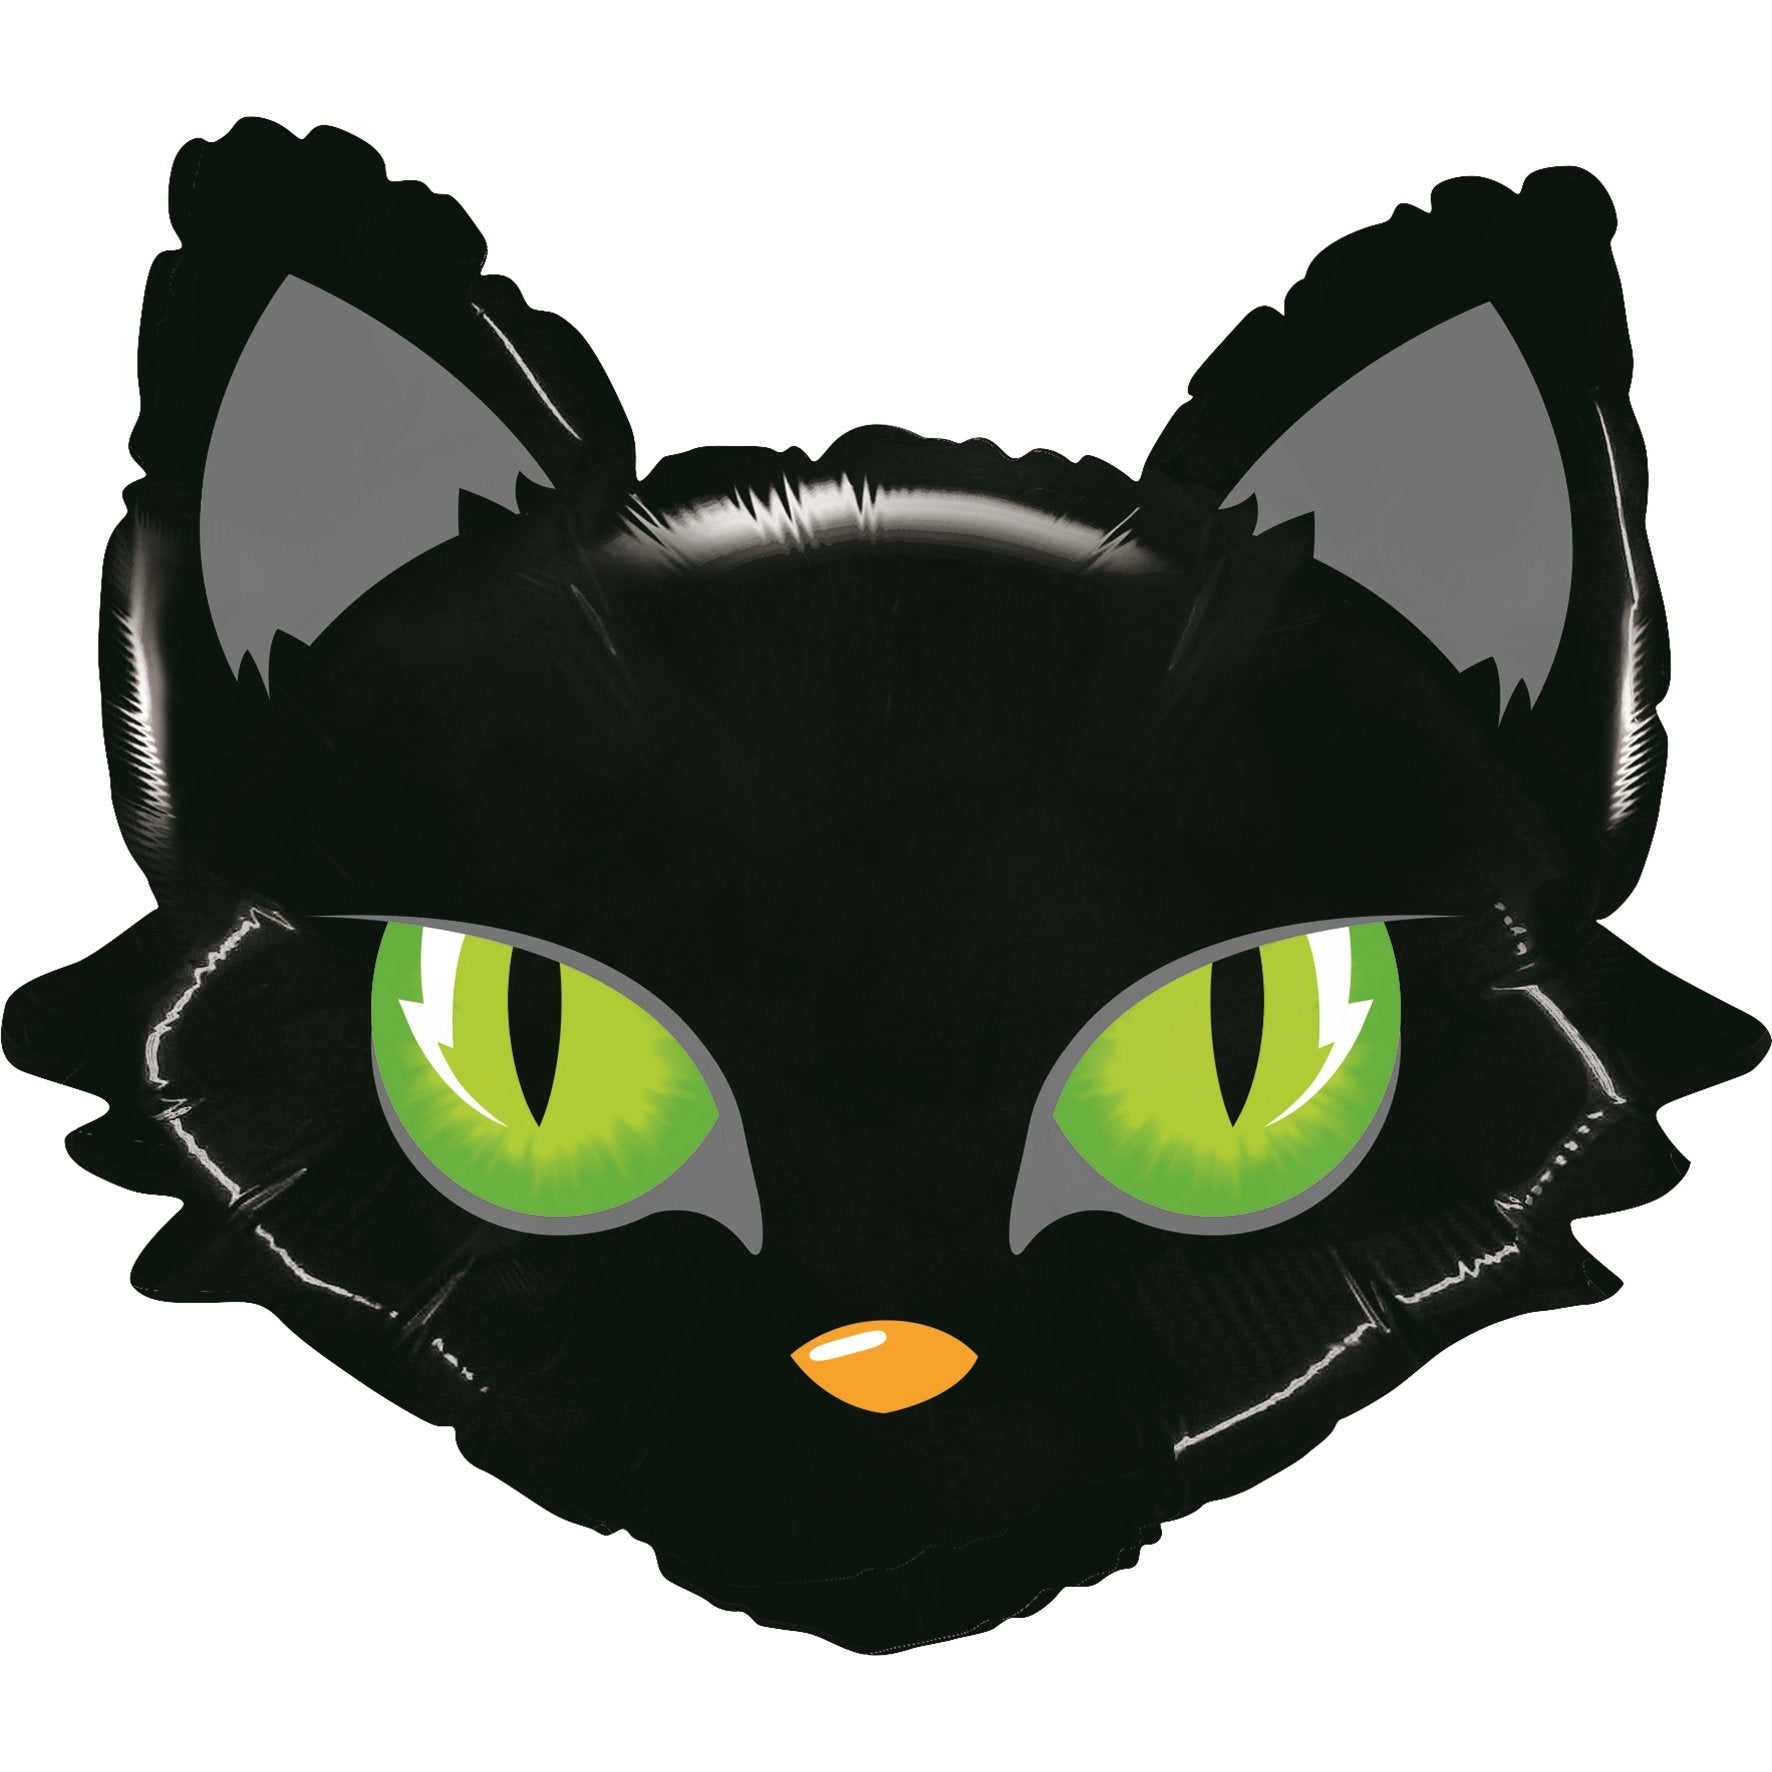 Balloon black cat head 71 cm